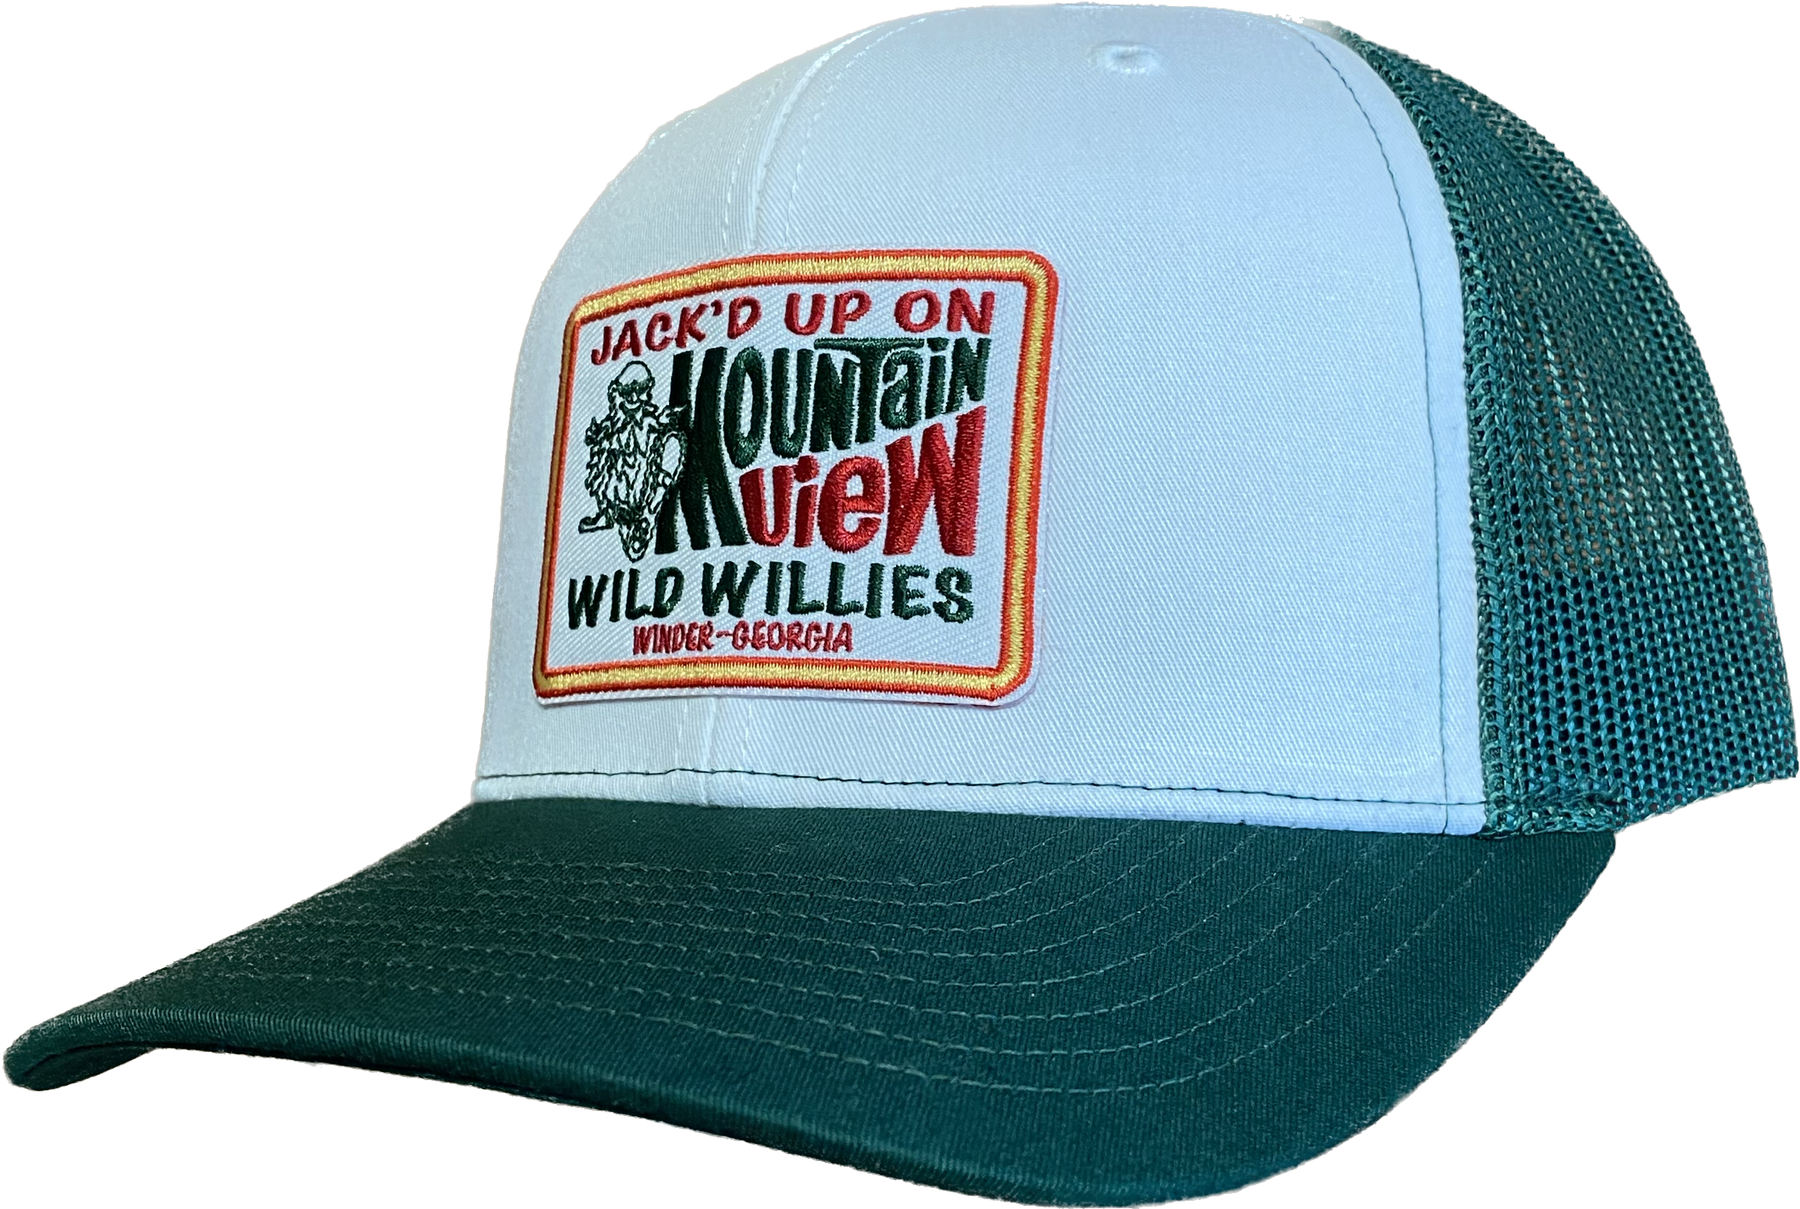 Wild Willies Jack'D Up on Mountain View Trucker Hat